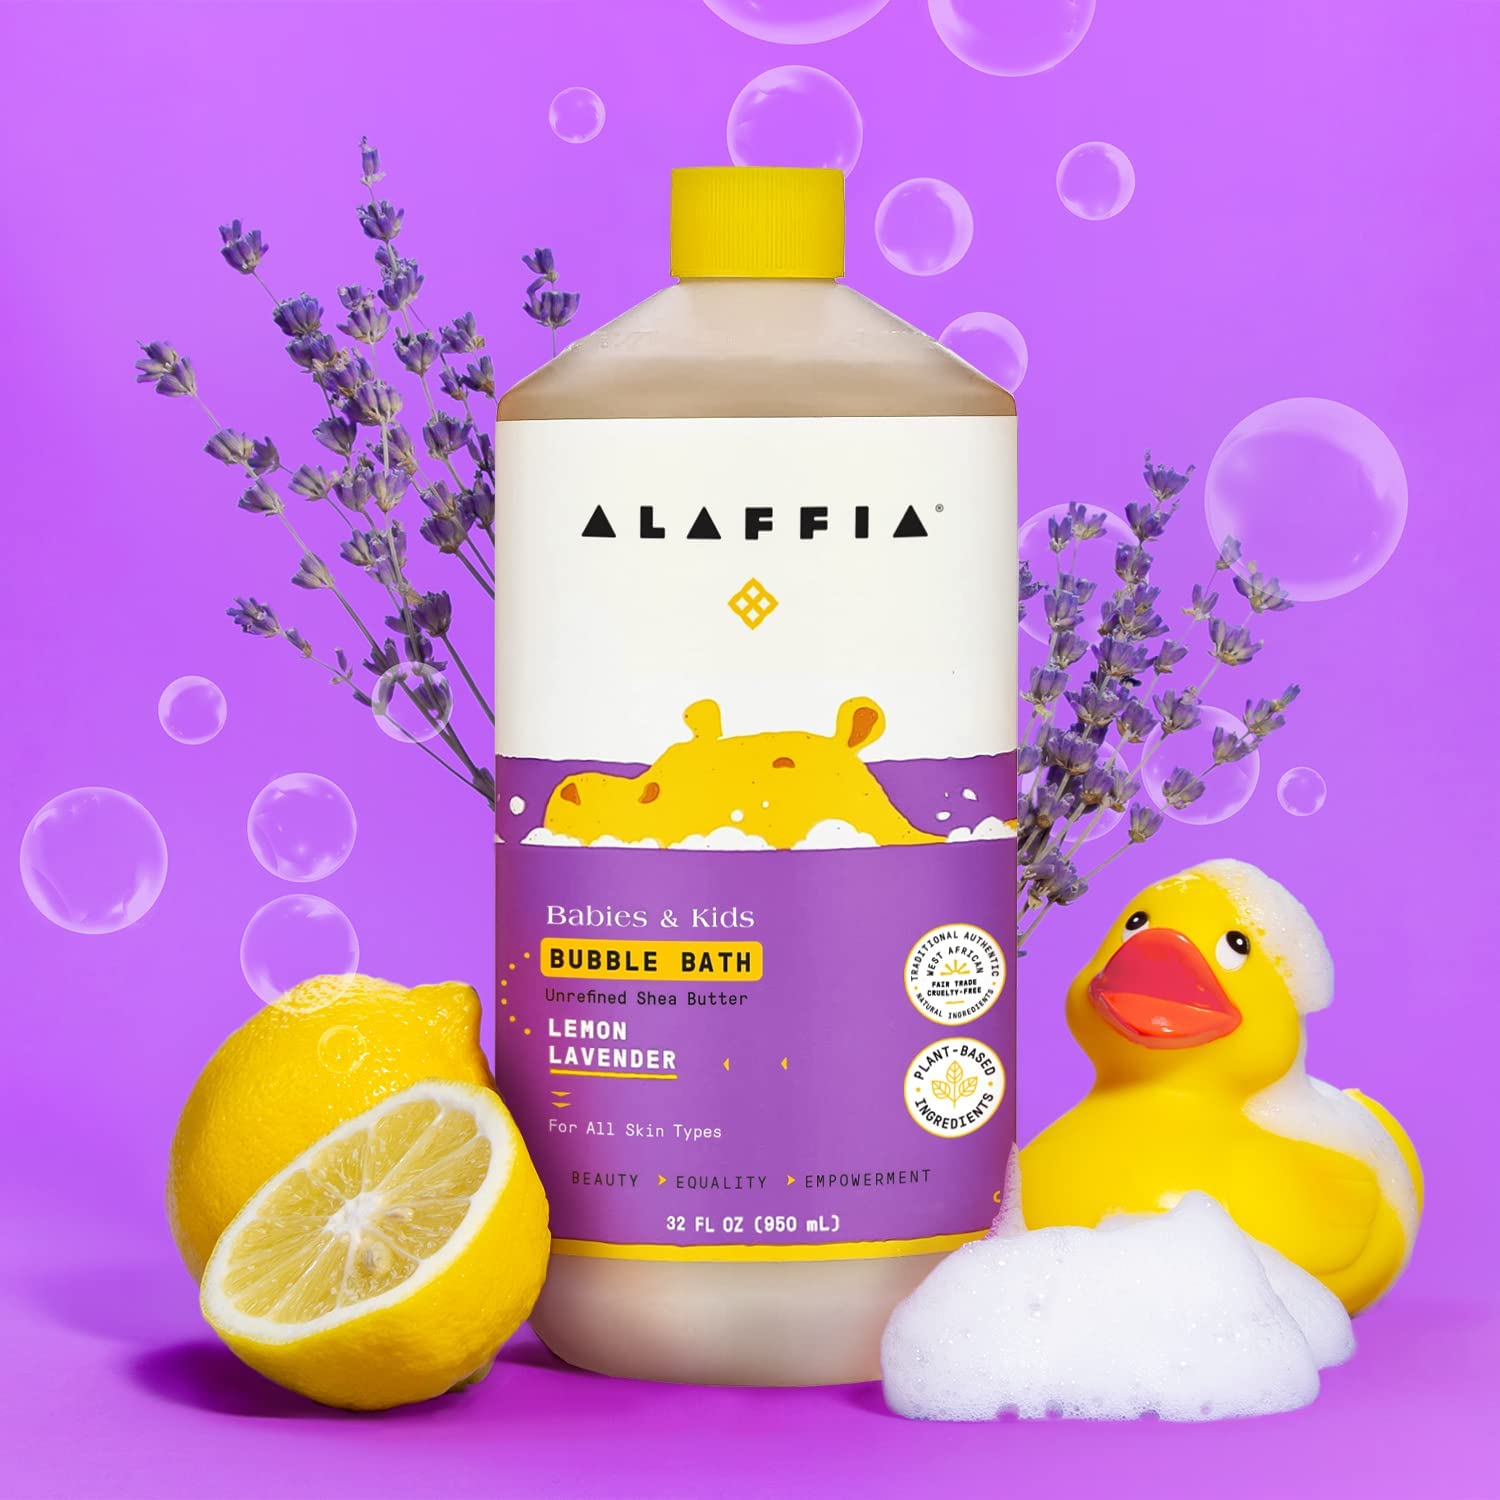 Alaffia Babies and Kids Bubble Bath Black-Owned